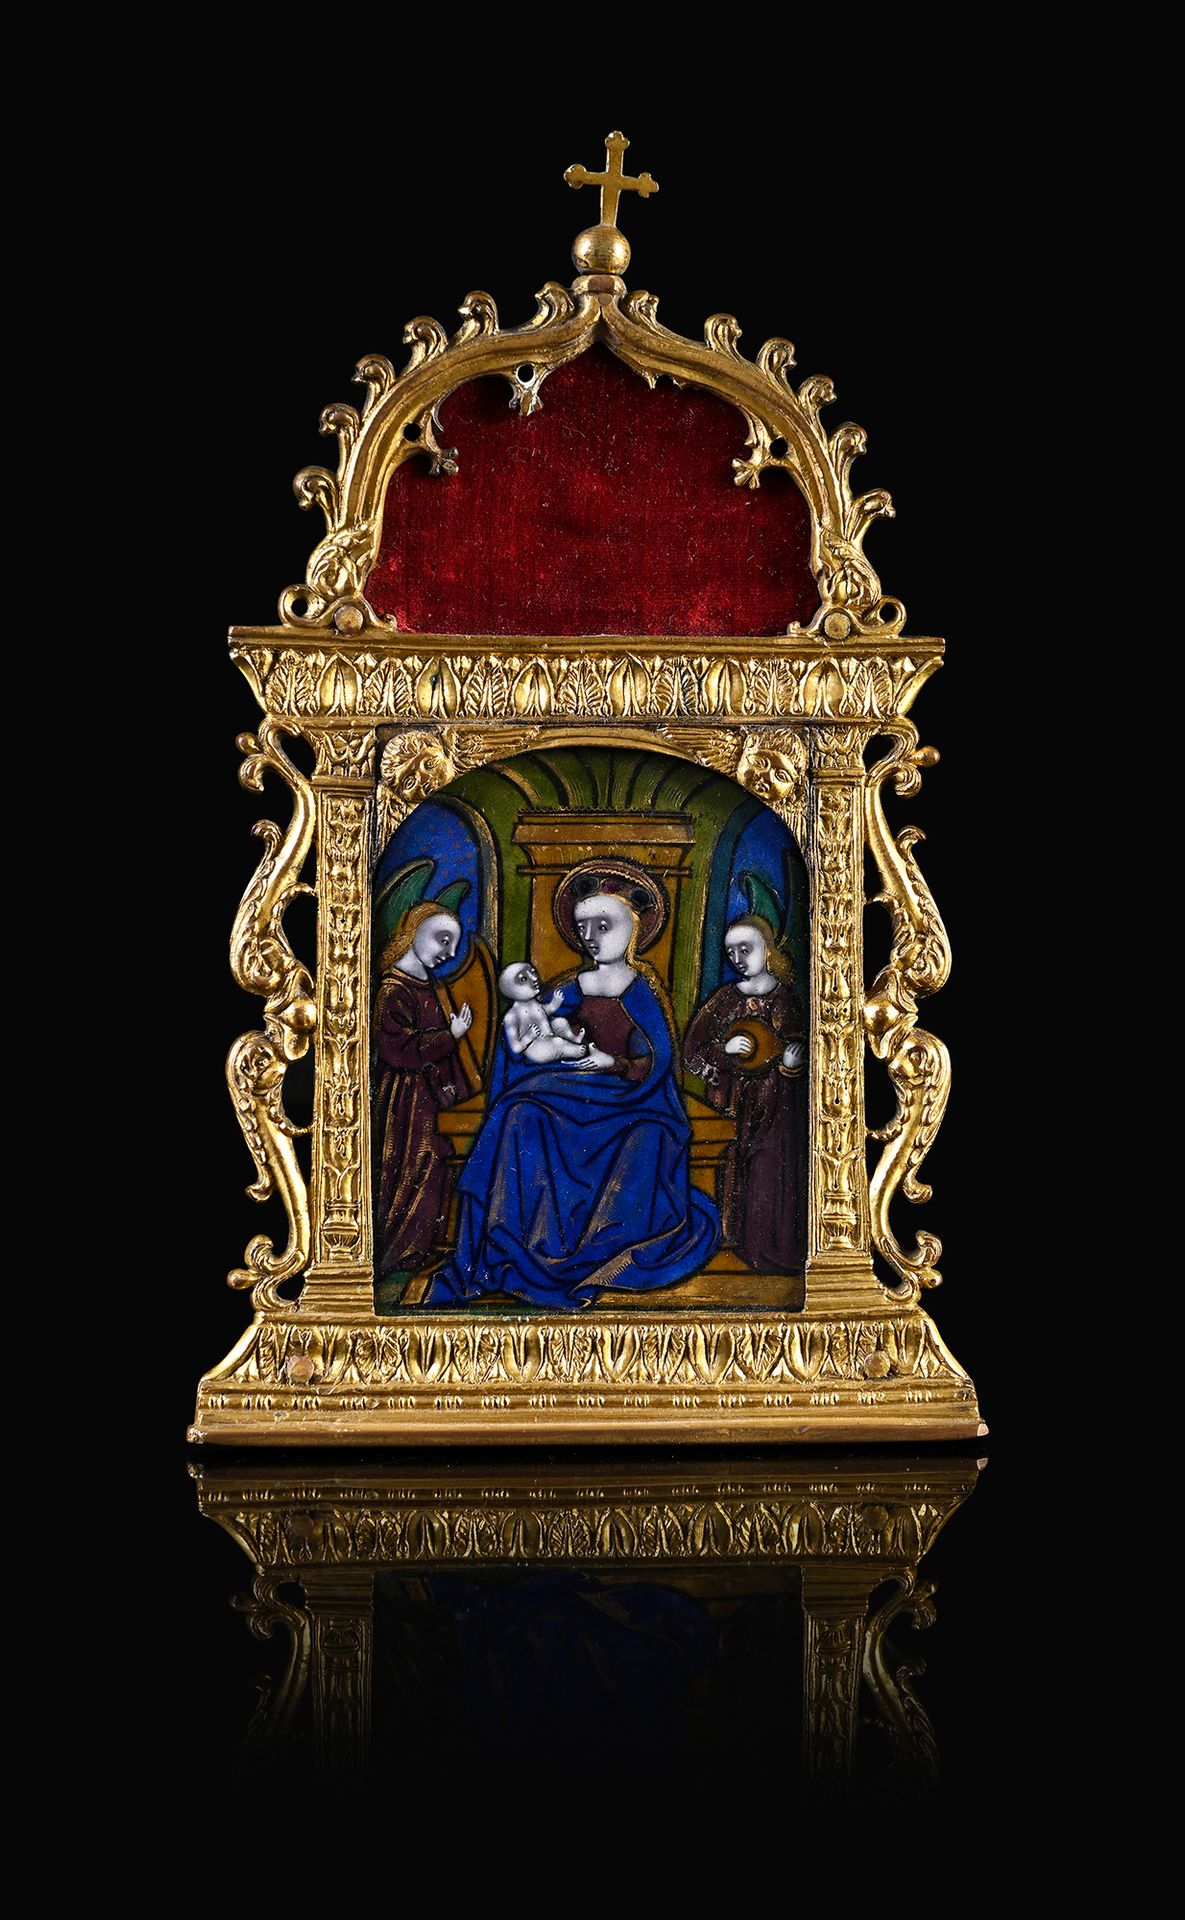 Null 和平之吻，带鎏金铜框和多色彩绘珐琅板，有金色亮点，表现了被天使包围的圣母和儿童。
利摩日，有大额头的大师工作室，约1500年
H.21厘米 - 宽13&hellip;